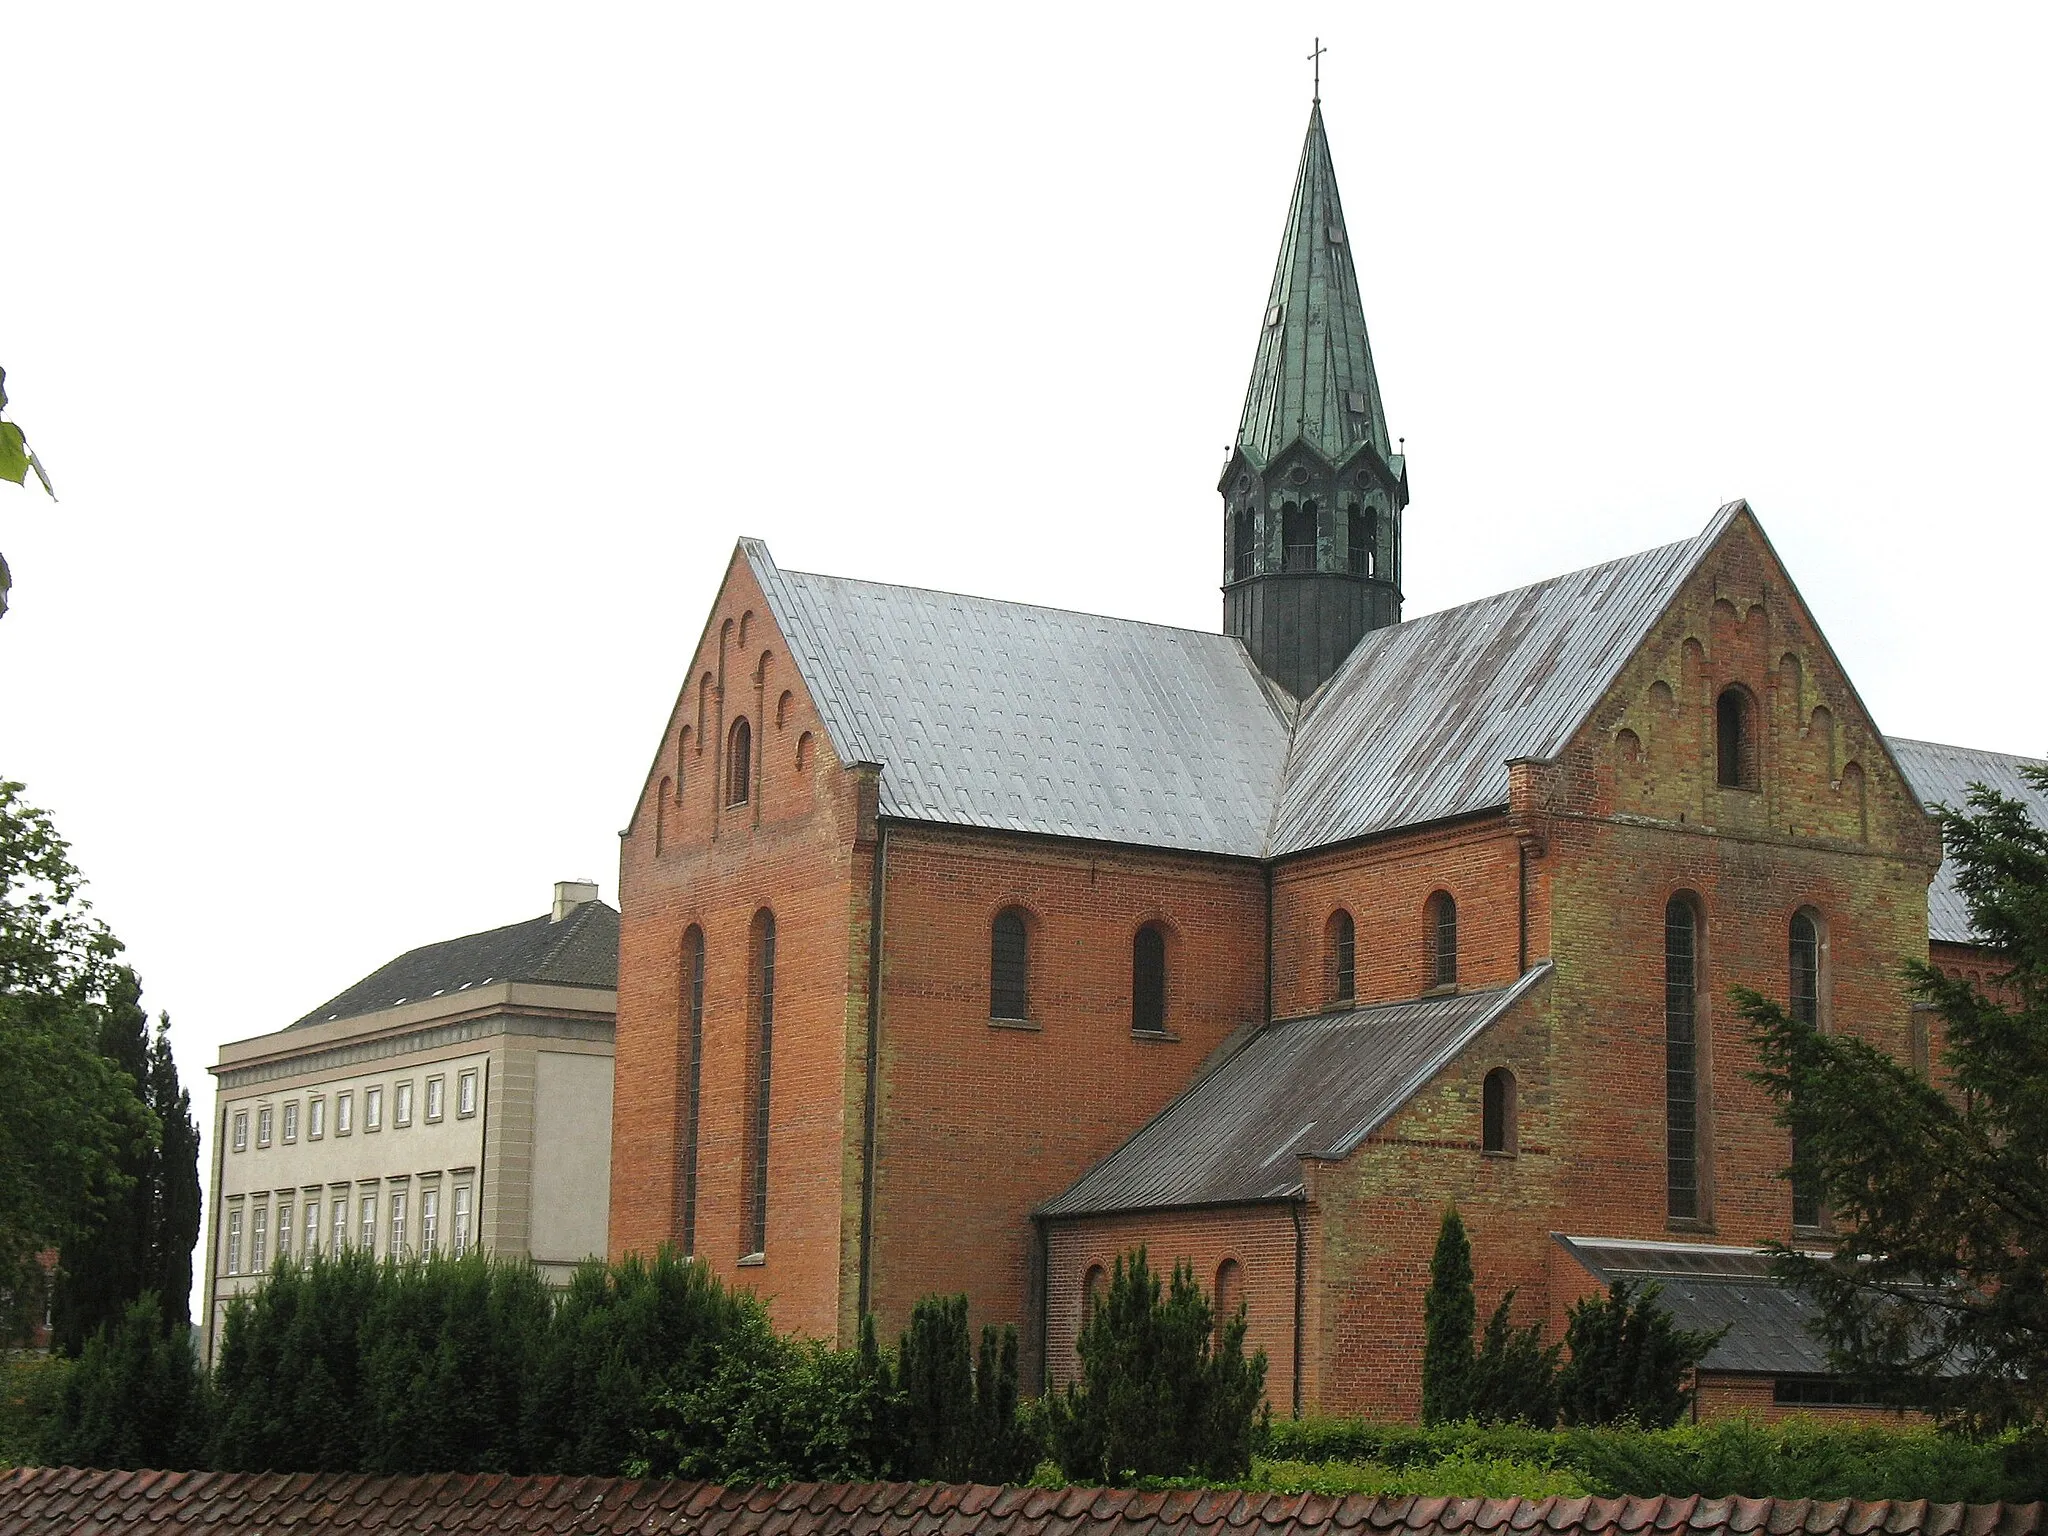 Photo showing: The monastery church "Sorø Klosterkirke" in the town "Sorø" located in West Zealand, east Denmark.